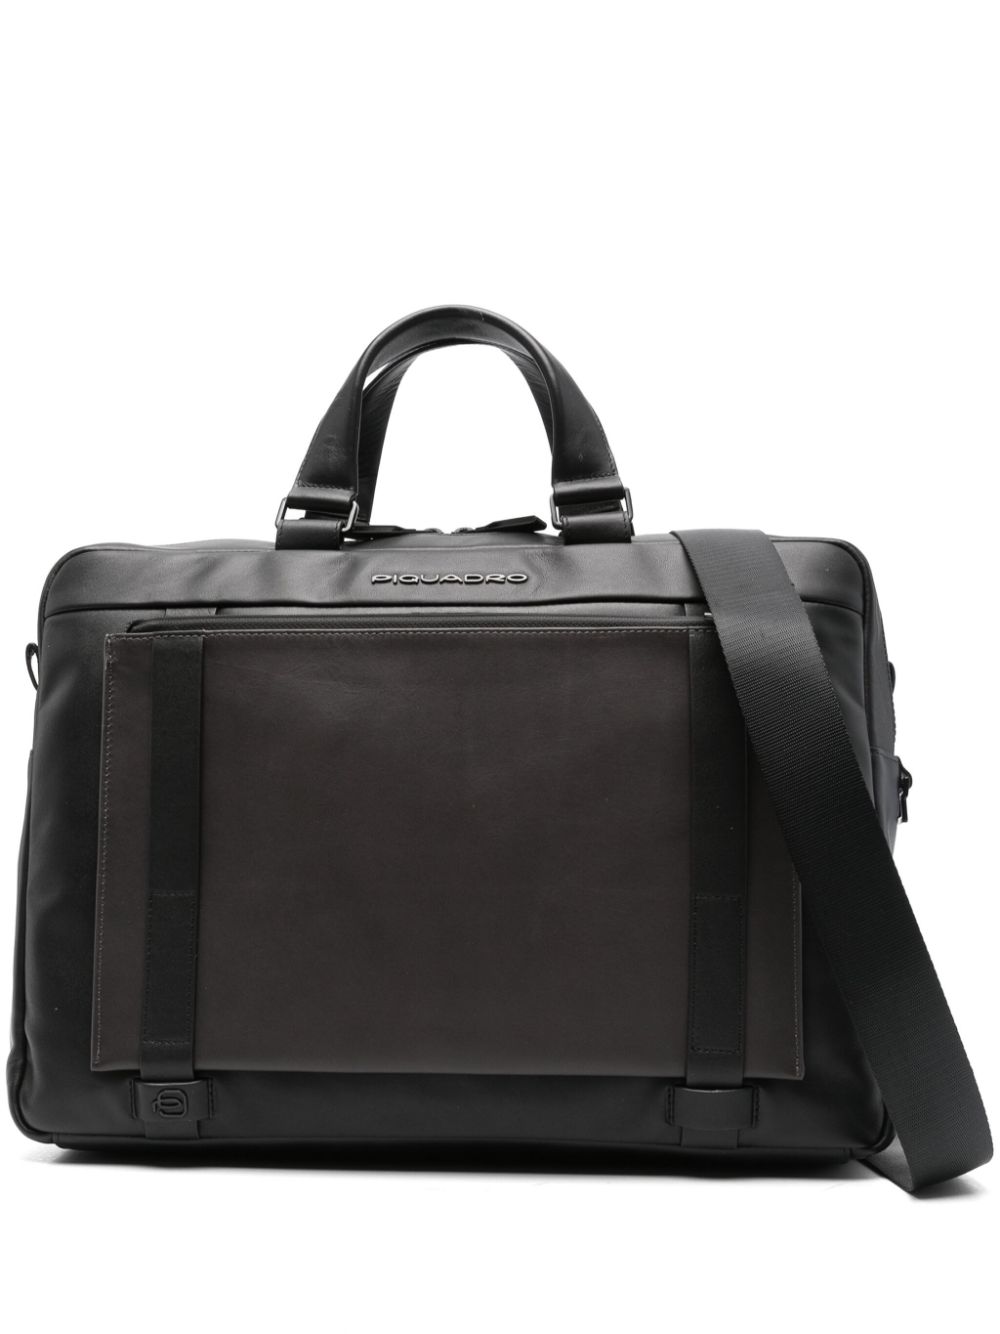 Image 1 of PIQUADRO leather laptop bag